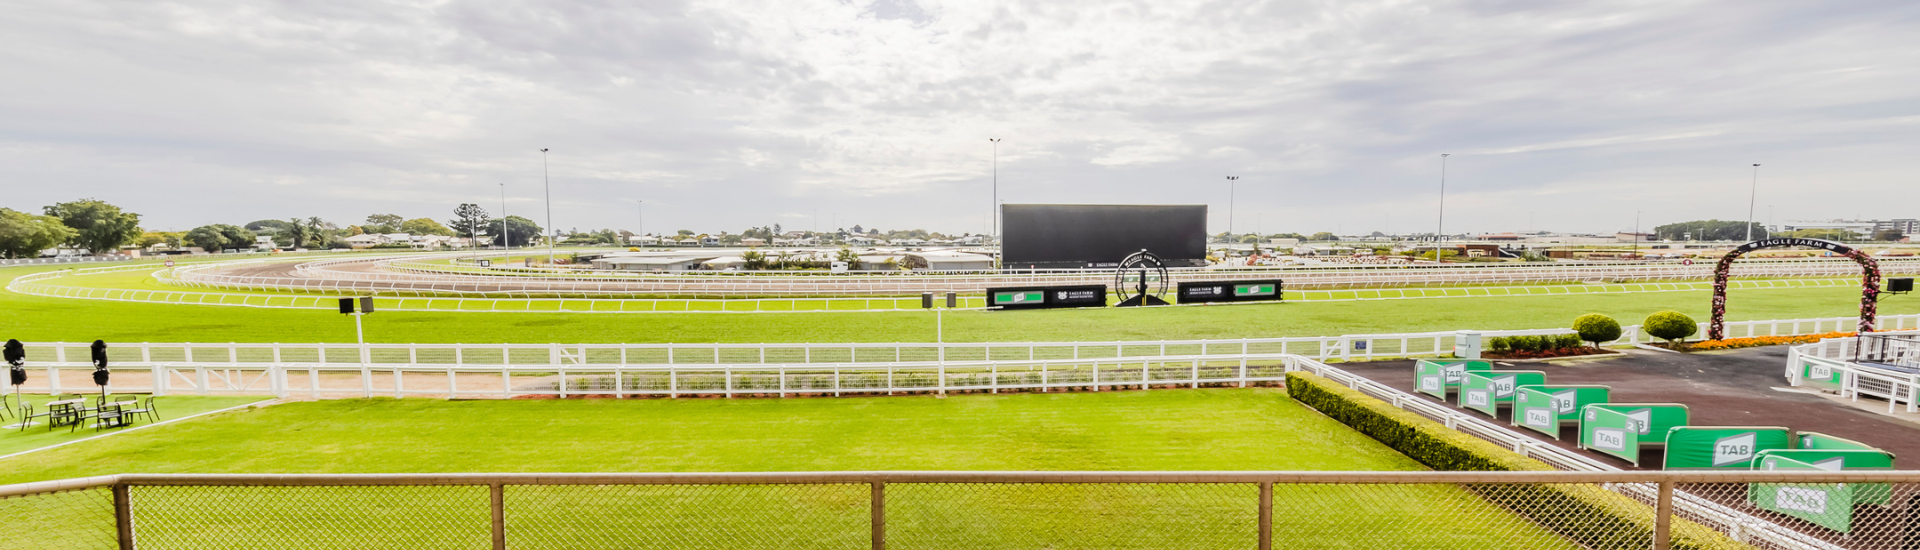 big-screen-on-the-green-eagle-farm-venue-web-banner | Brisbane Racing Club